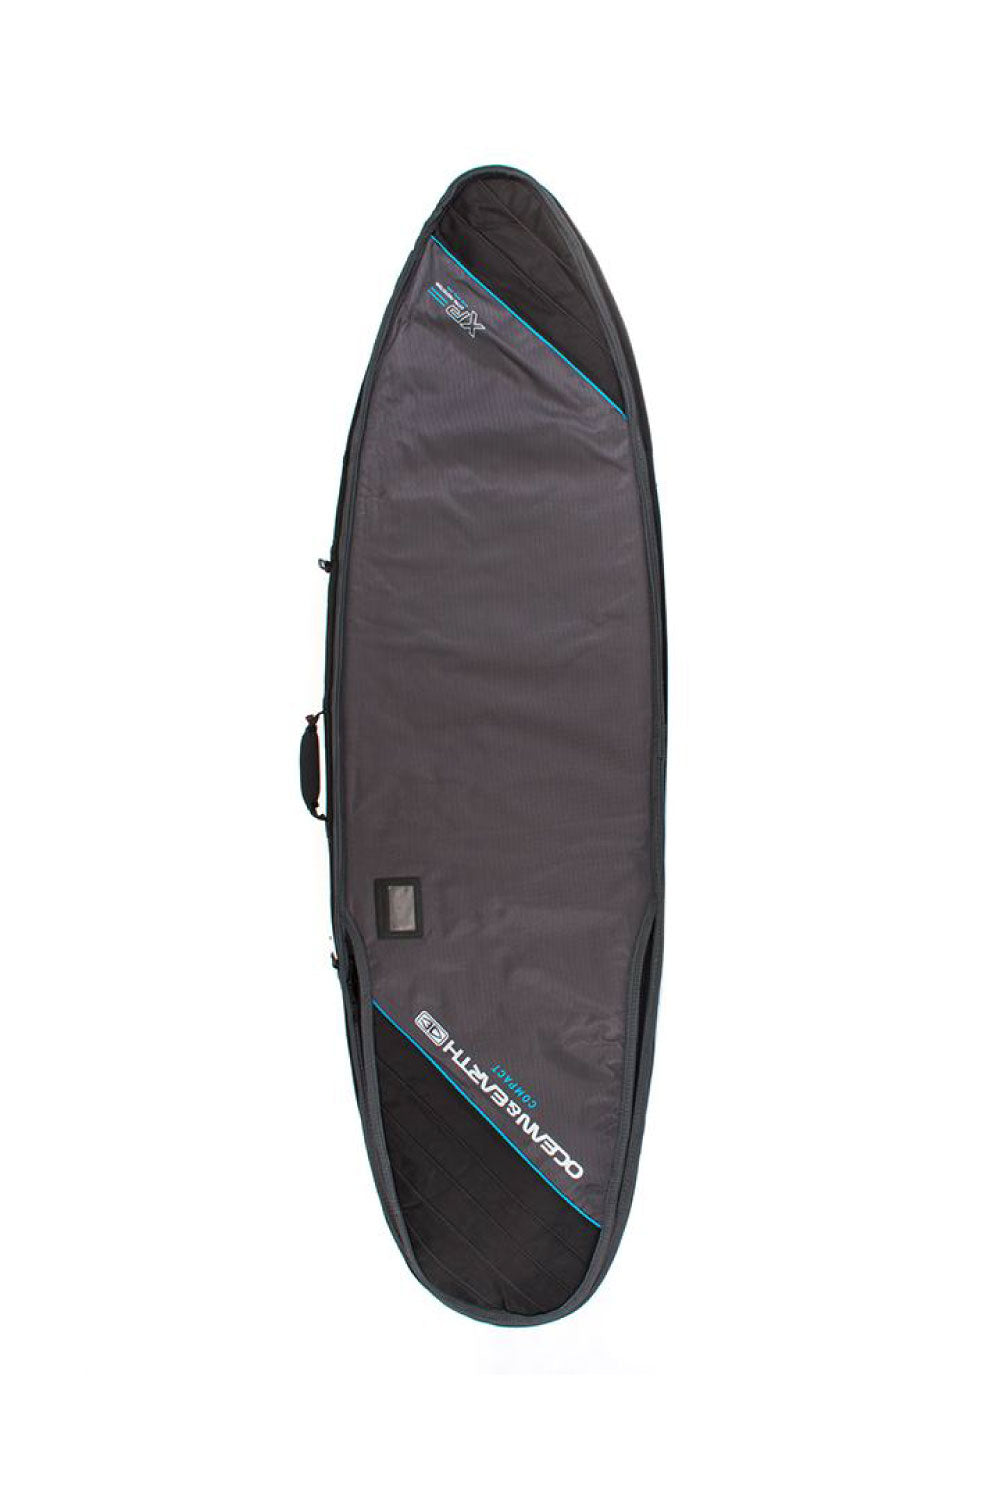 Ocean & Earth Double Compact Shortboard Cover